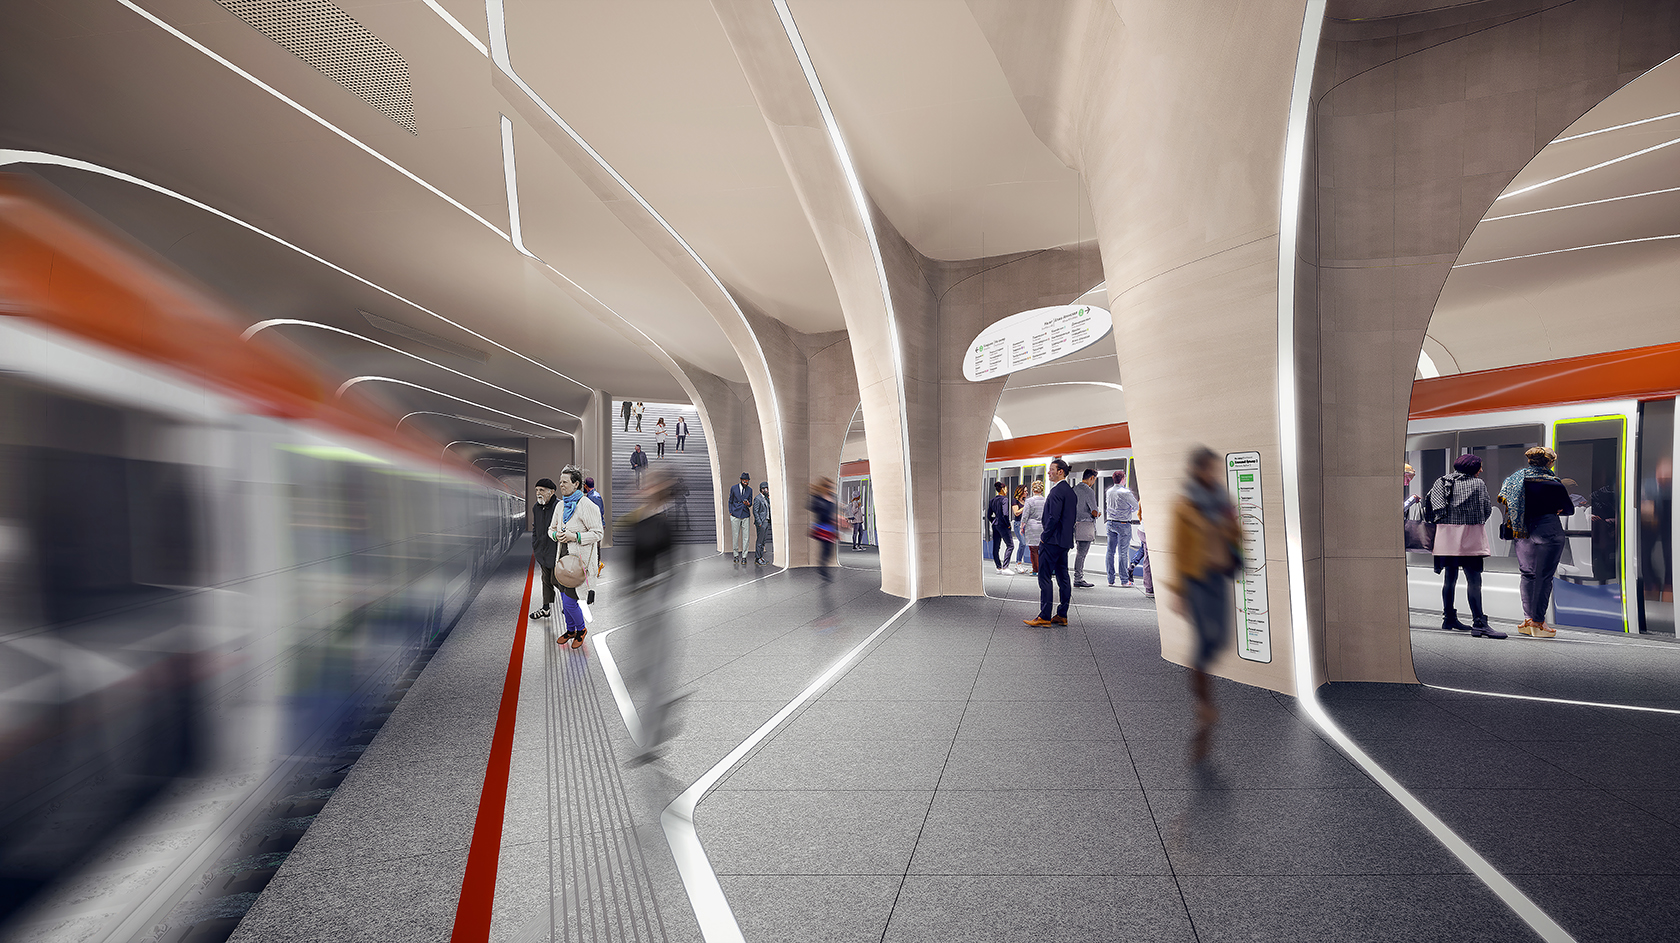 moscu estacion metro futuro zha moscow station platformlevel lowres 2